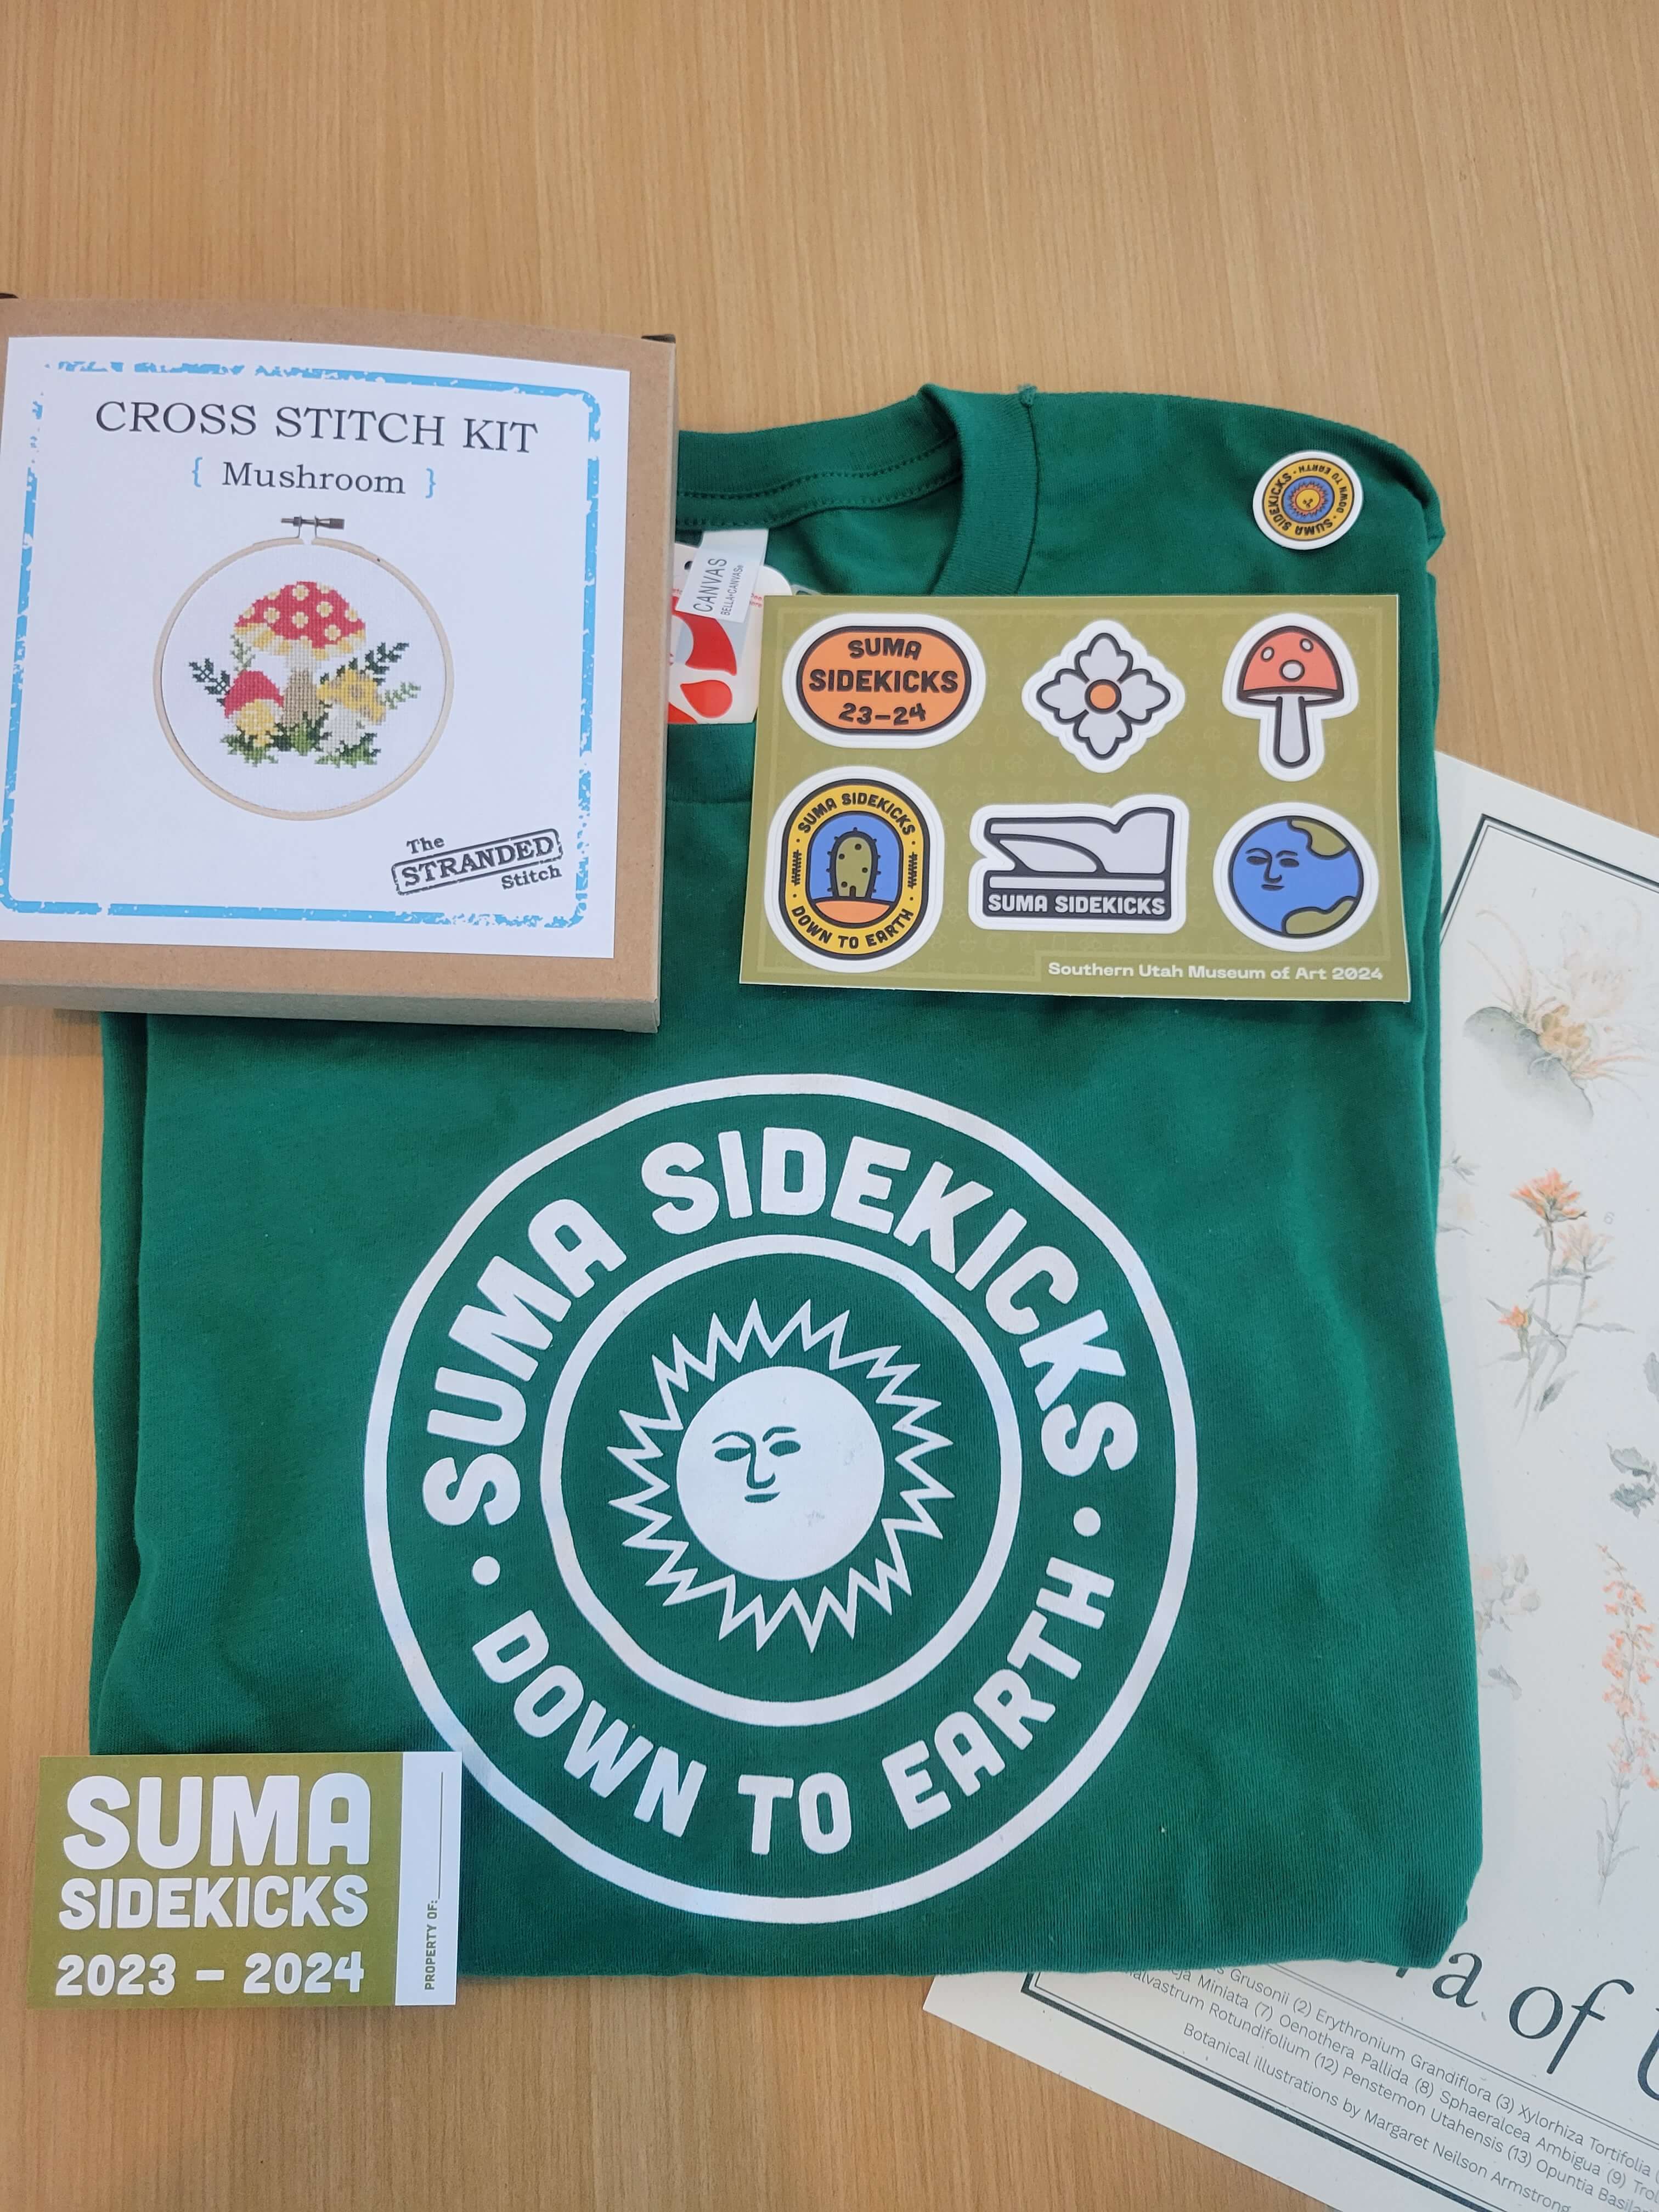 SUMA Sidekicks 2023-2024 Prizes